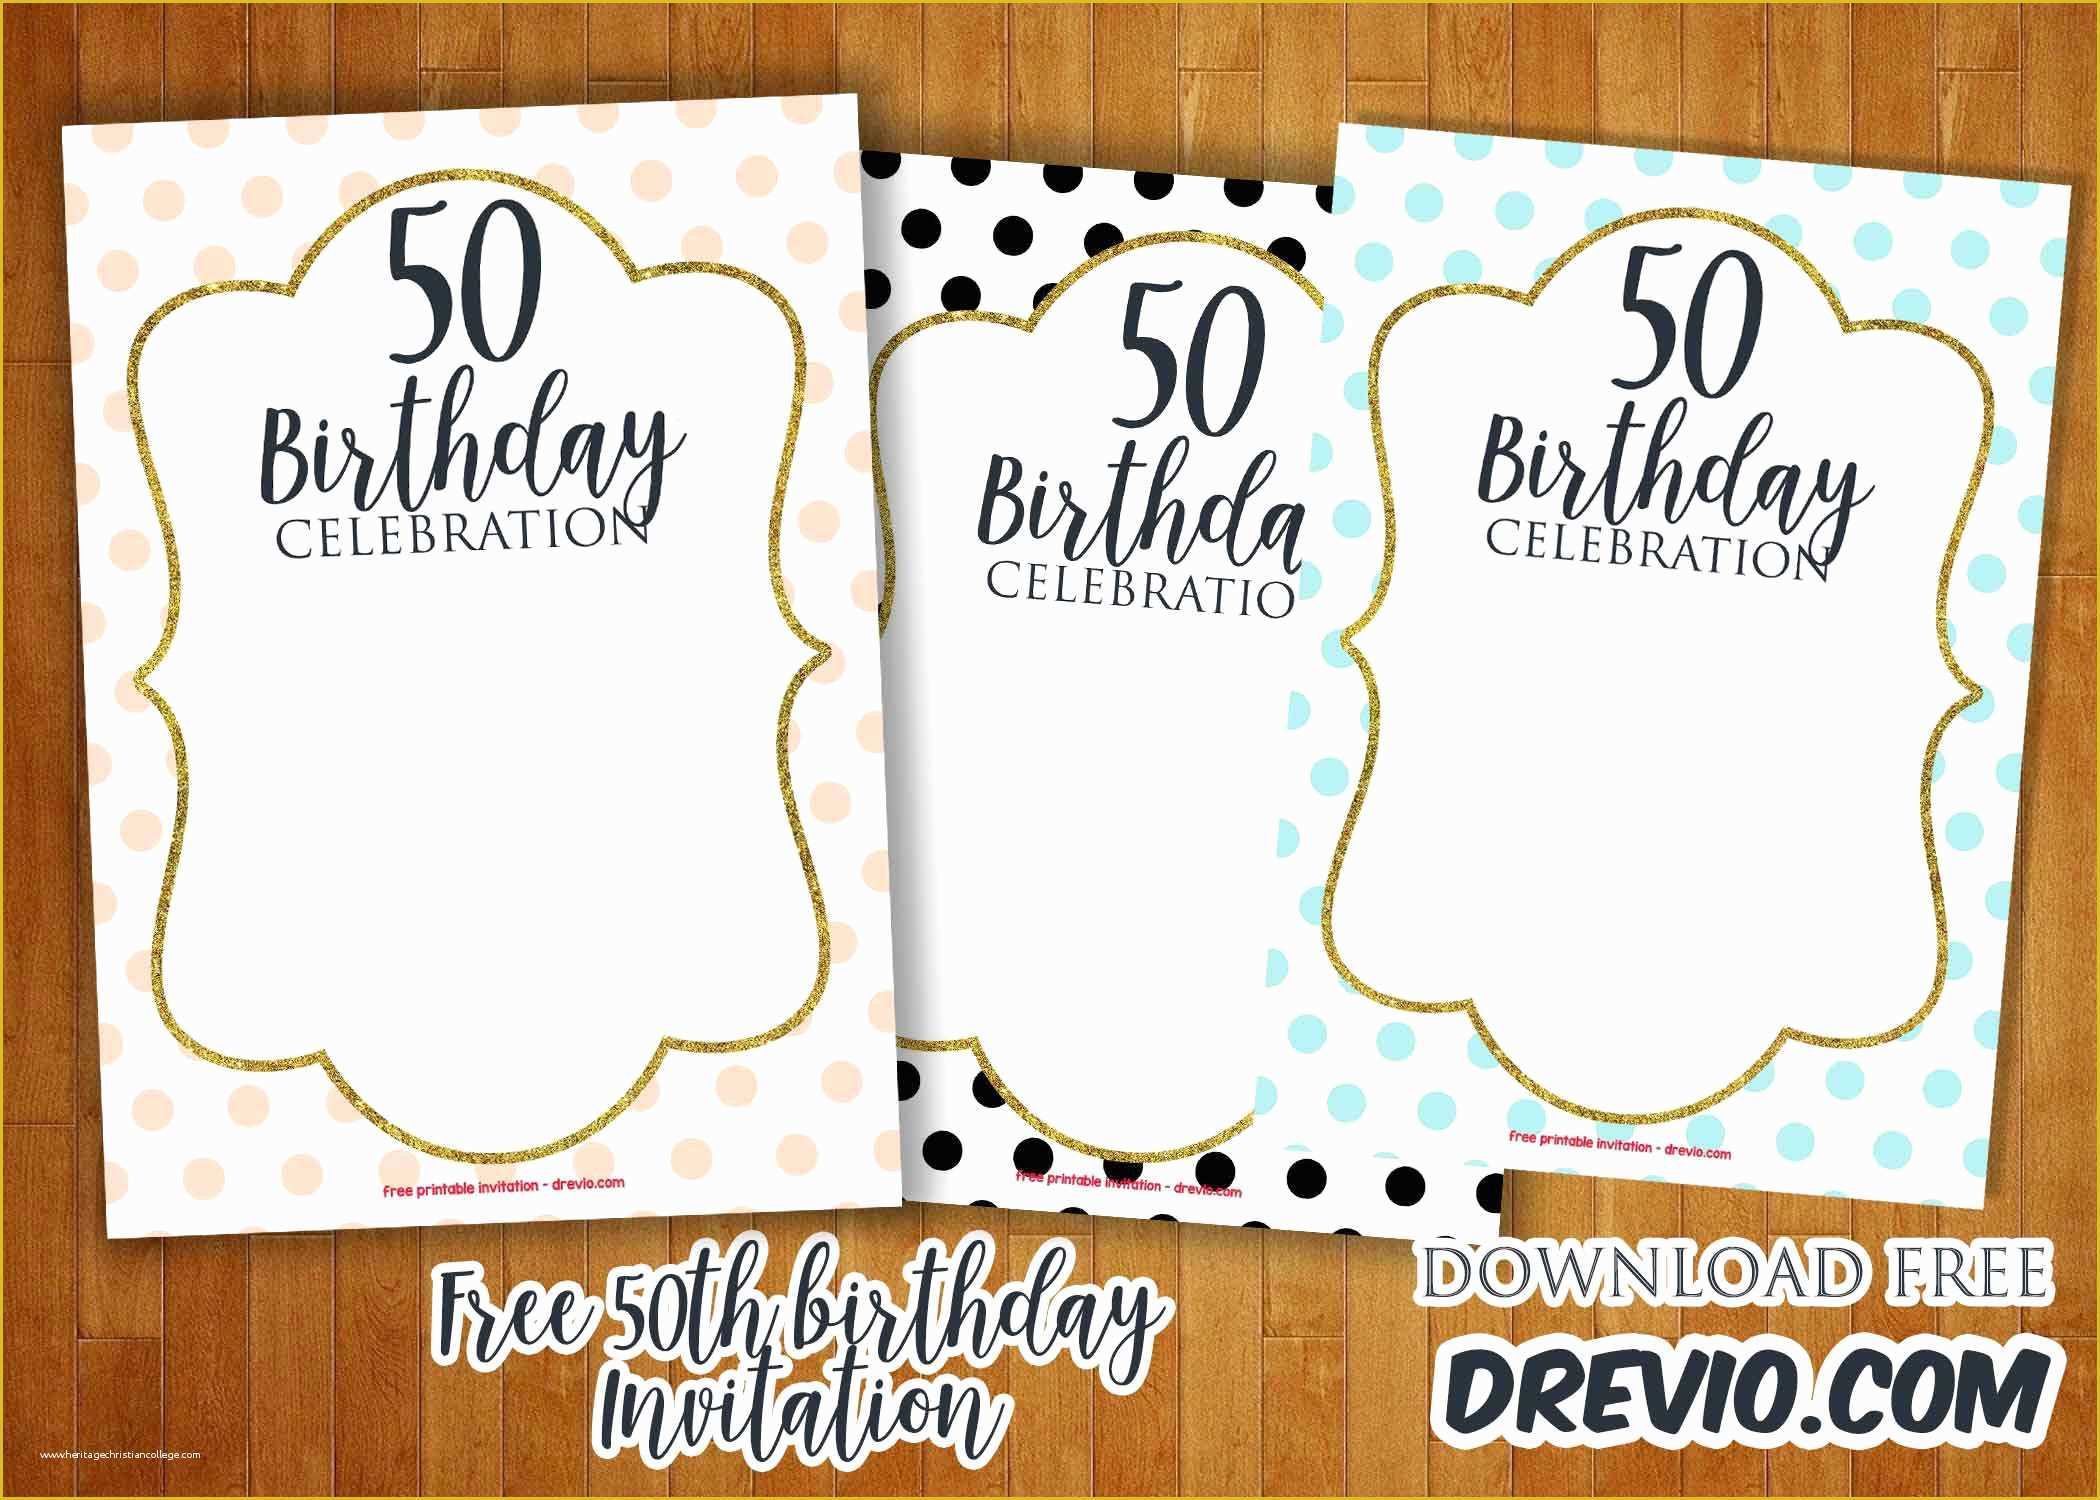 Free Birthday Templates with Photo Of 50th Birthday Invitations Line